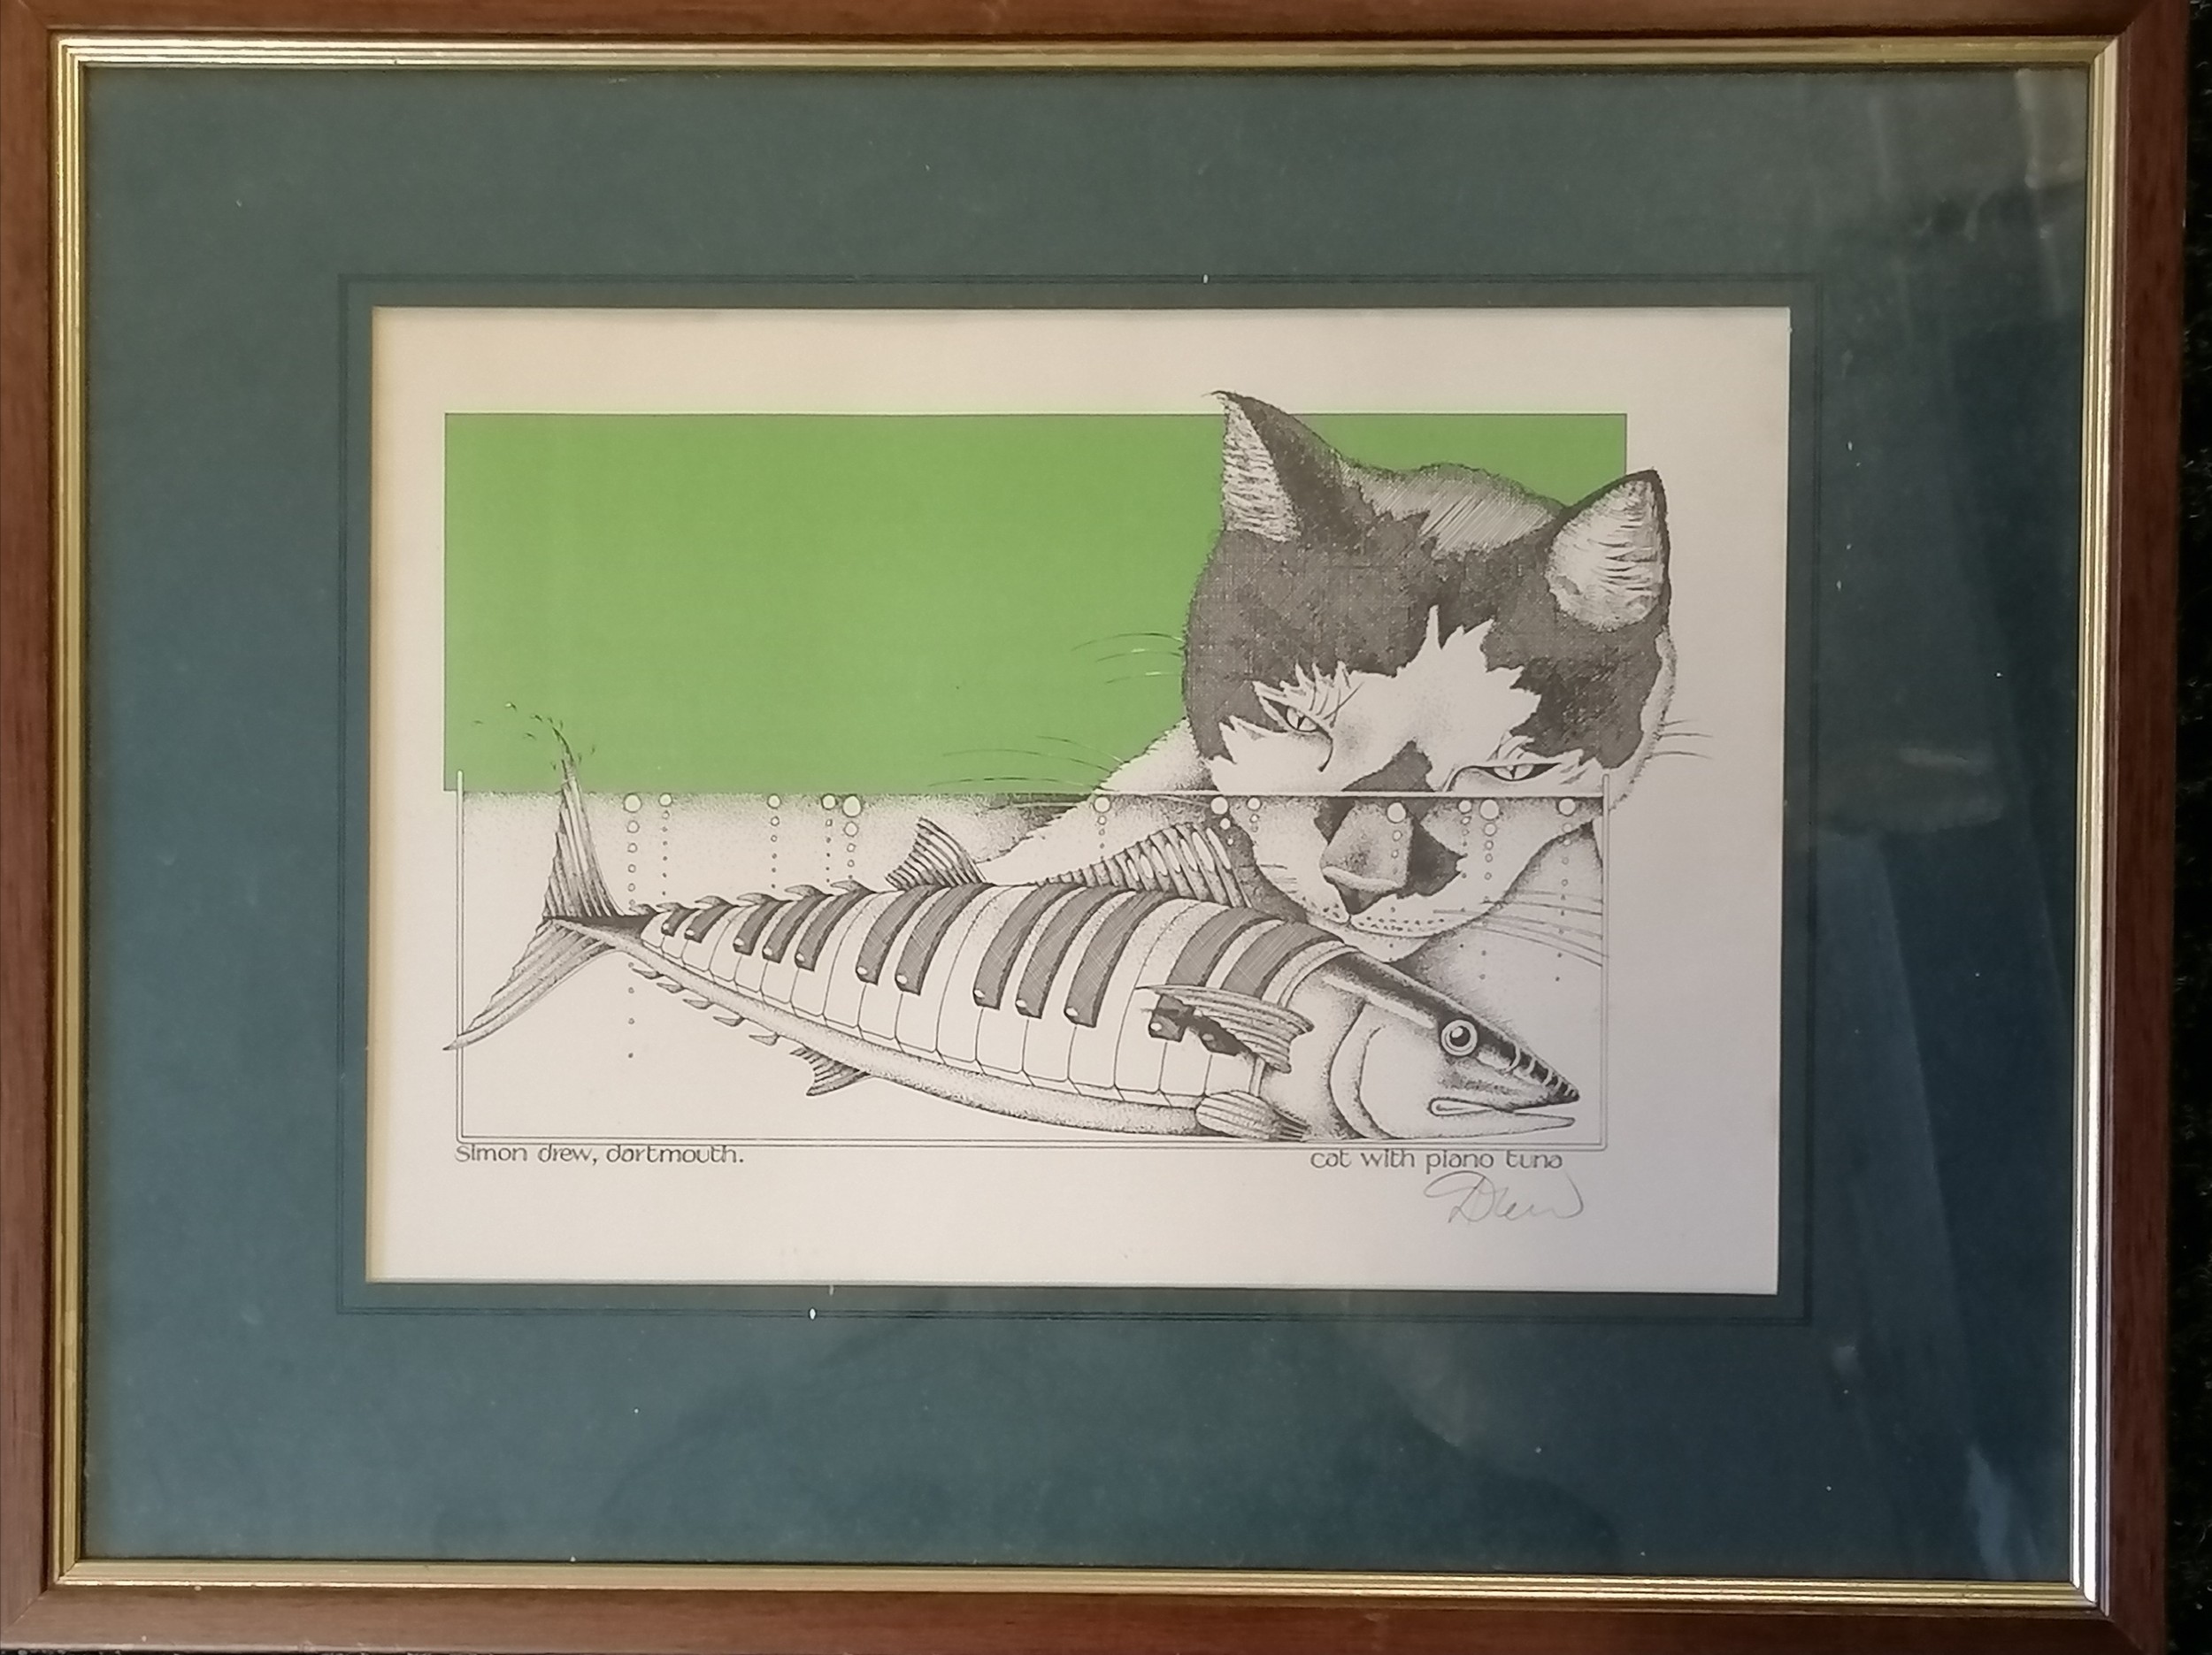 Simon Drew, Dartmouth hand signed print 'Cat With Piano Tuna' framed 50cm x 39cm - Image 3 of 3